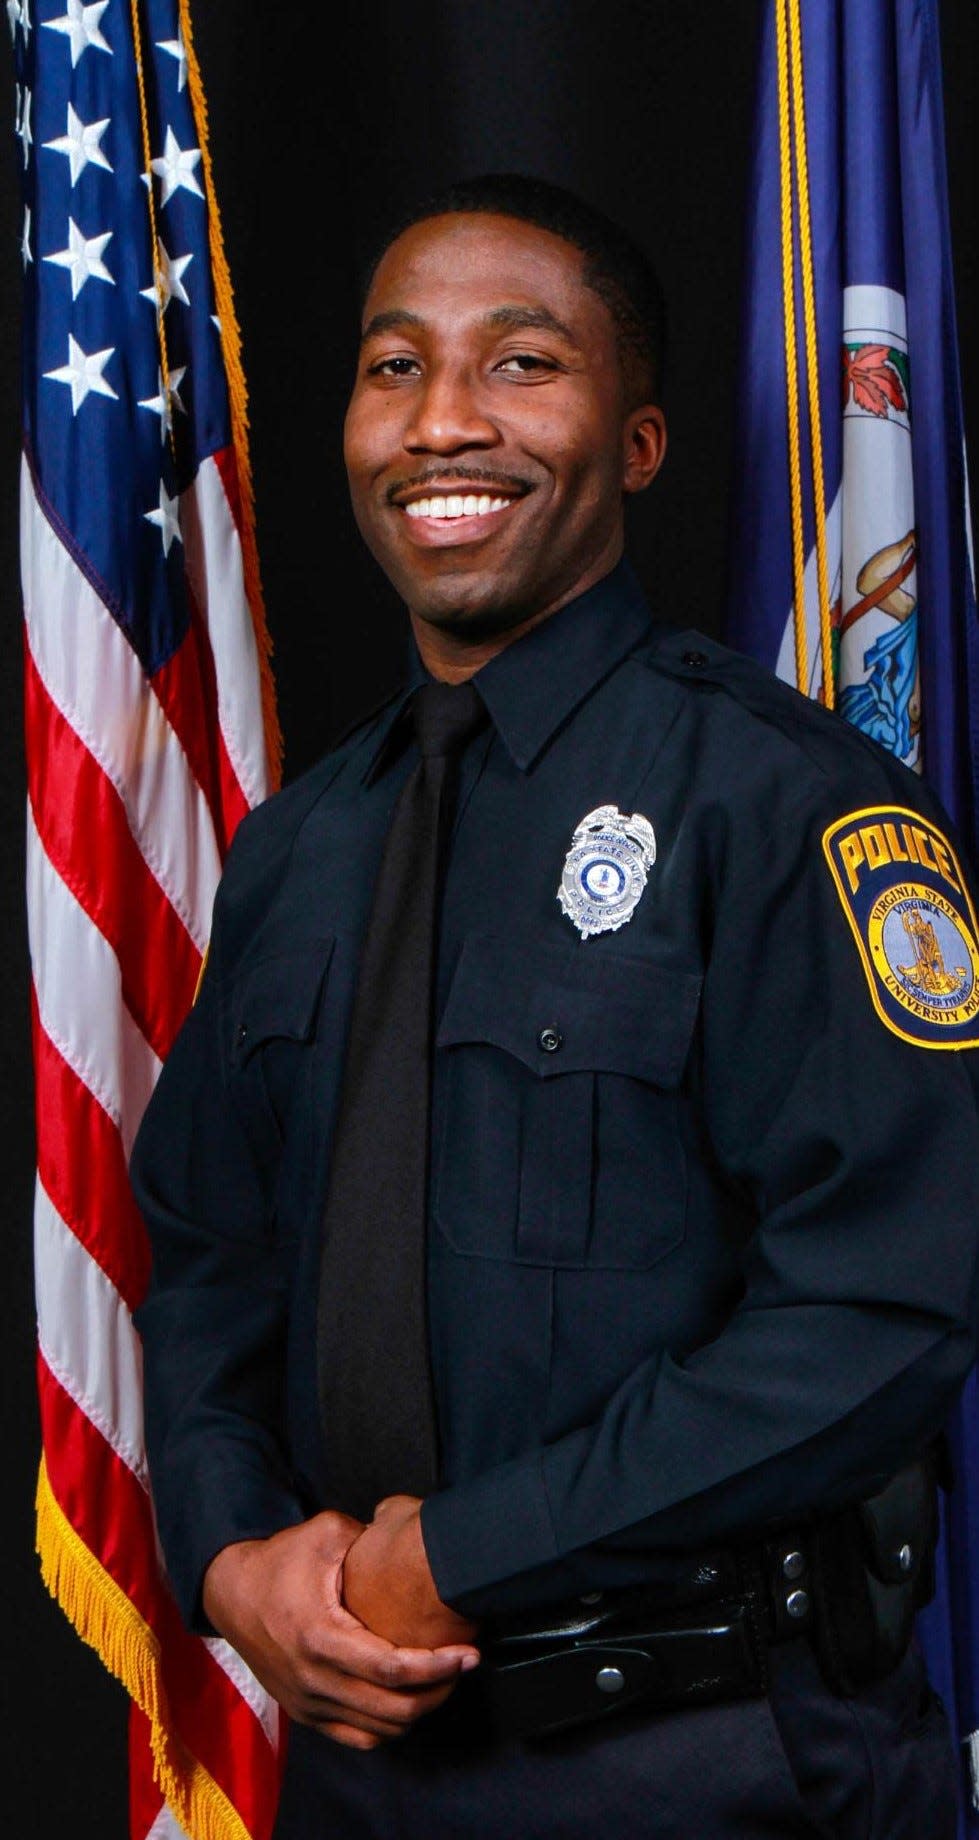 VSU Police Officer Bruce Foster